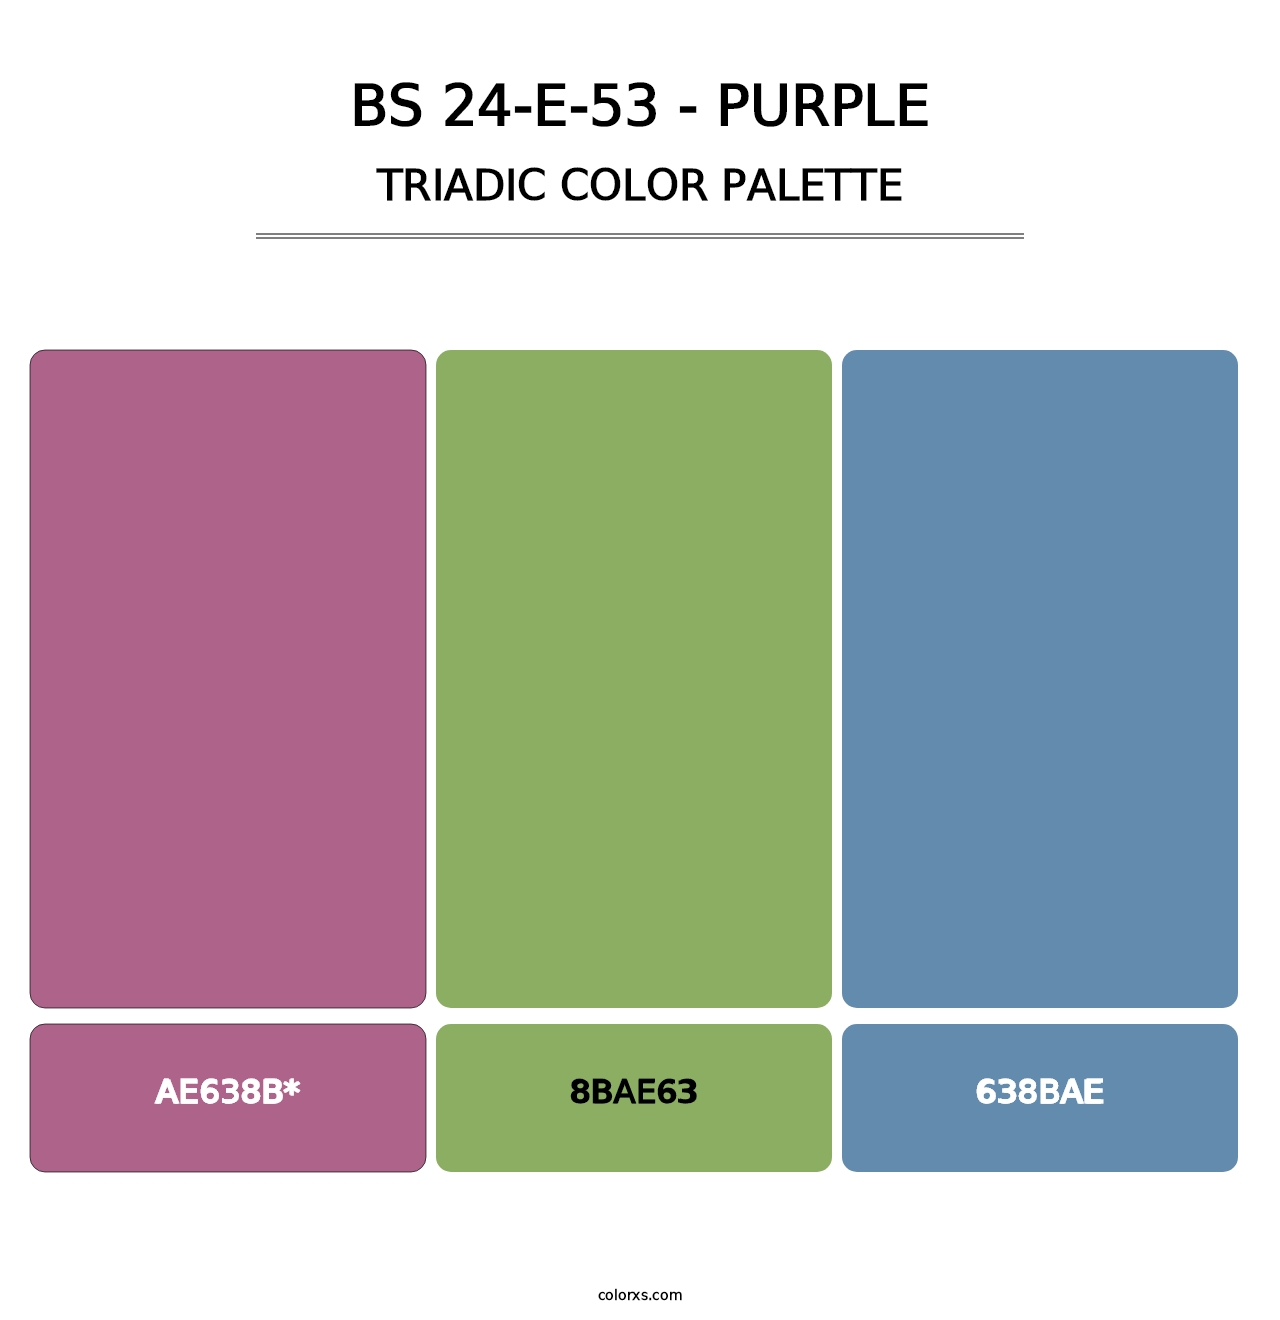 BS 24-E-53 - Purple - Triadic Color Palette